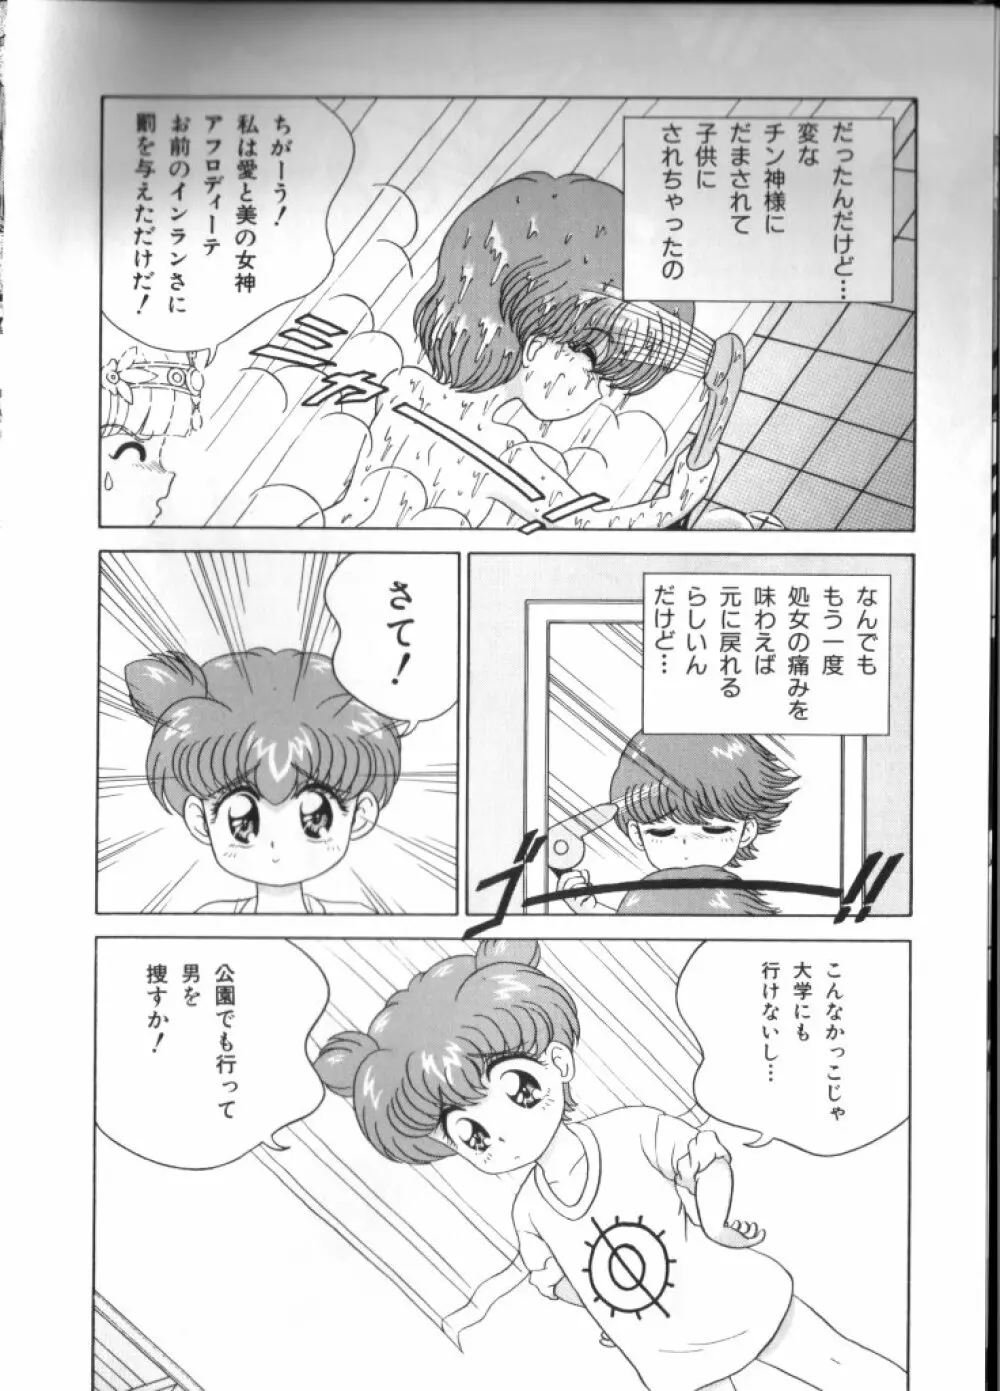 妖精日記 第4号 142ページ